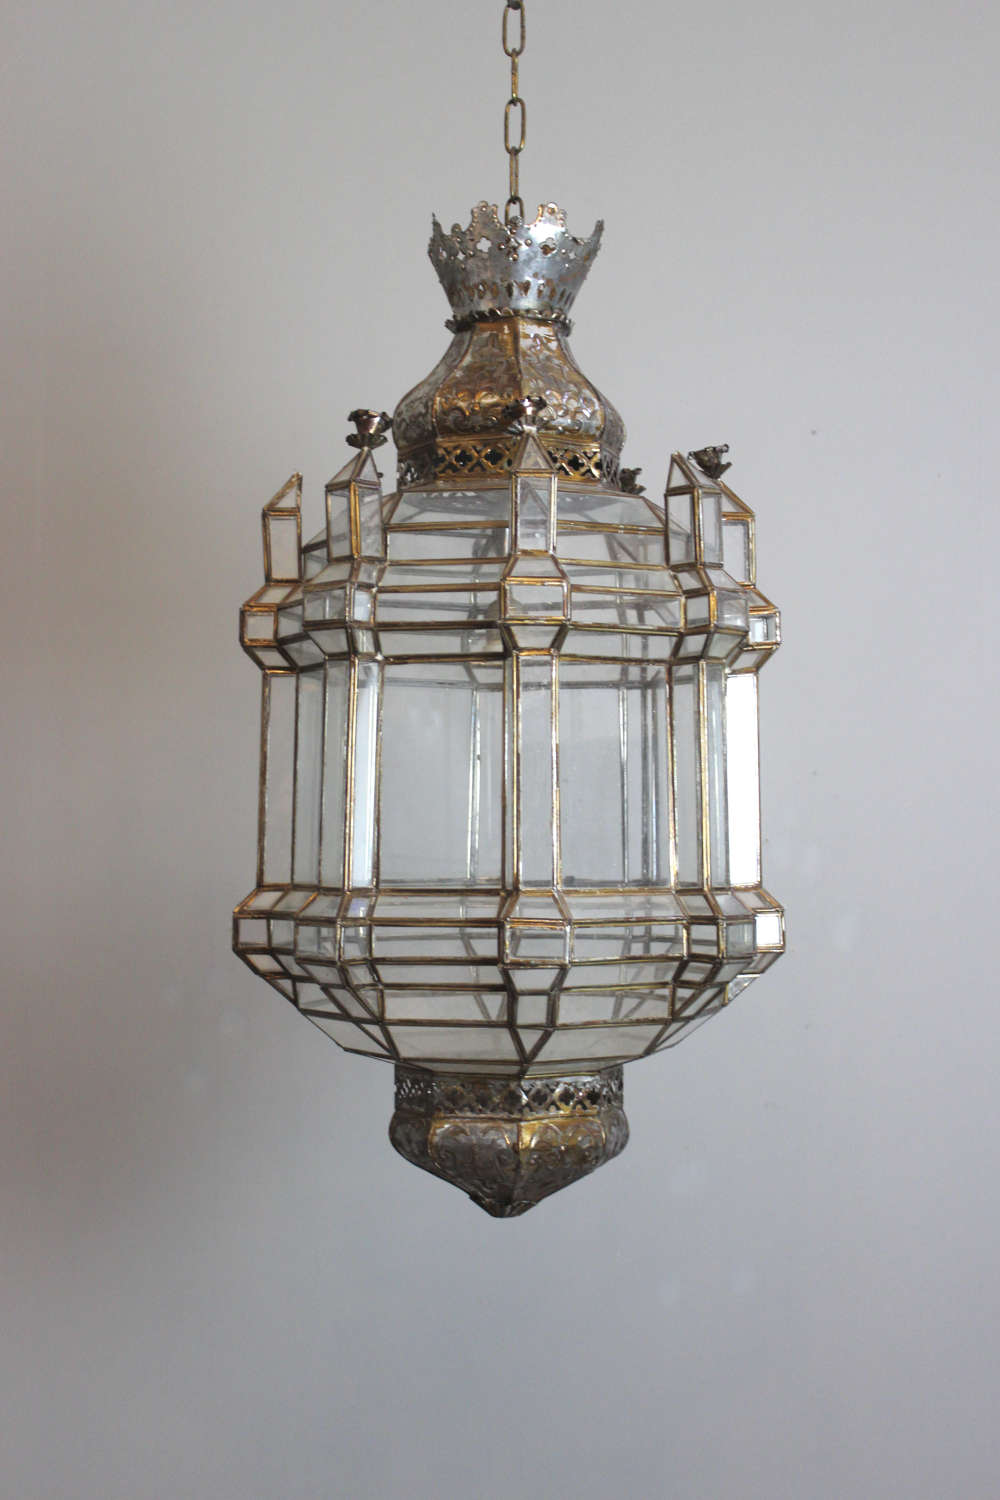 Larger scale Moroccan lantern circa 1930